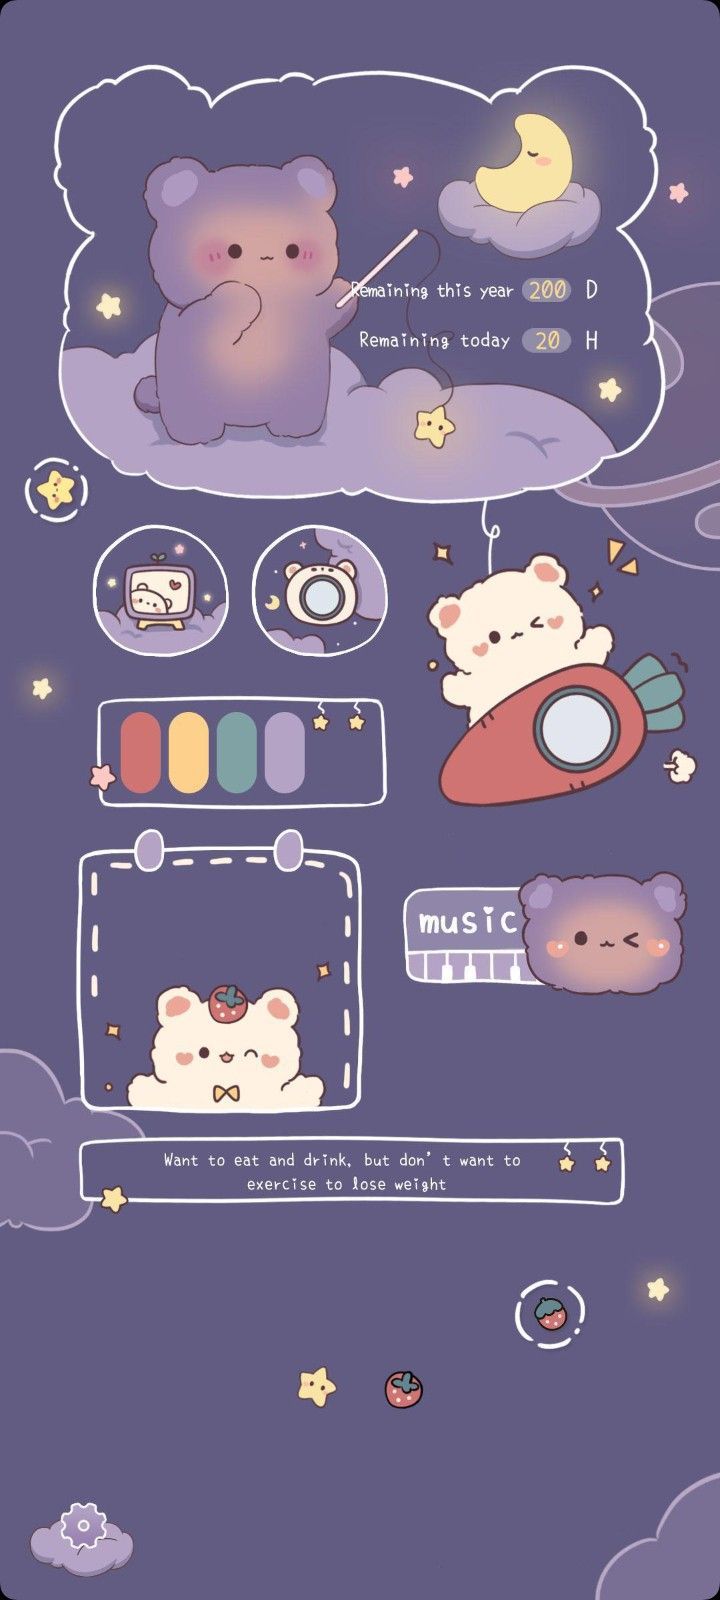 Pin by Melinda Kurnia Qinanti on Hnh nh Wallpaper iphone cute, Hello kitty iphone wallpaper, Cute cartoon wallpapers